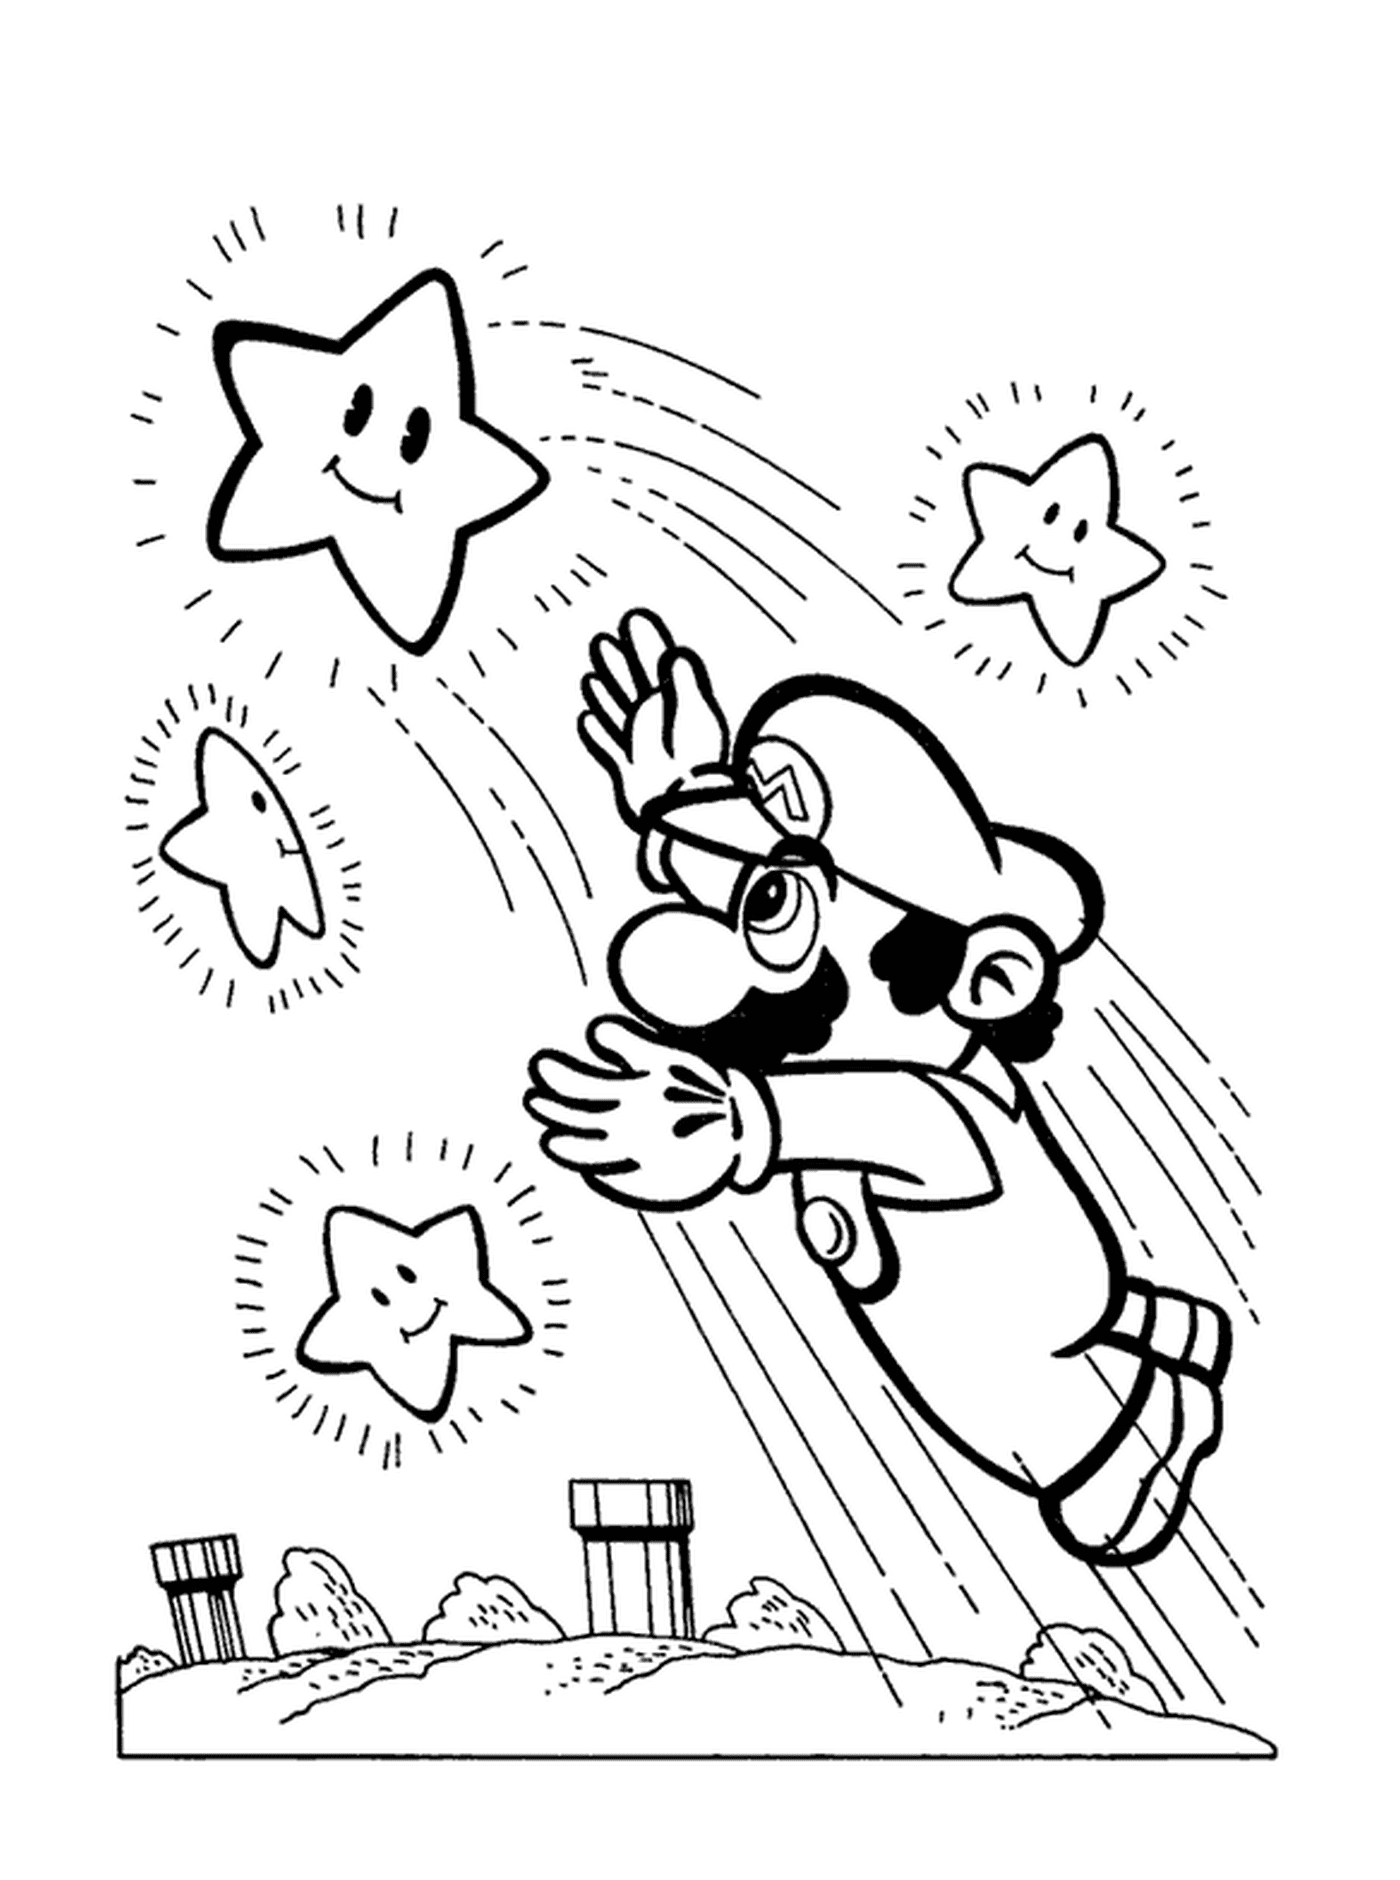  Mario grabs a bright star 